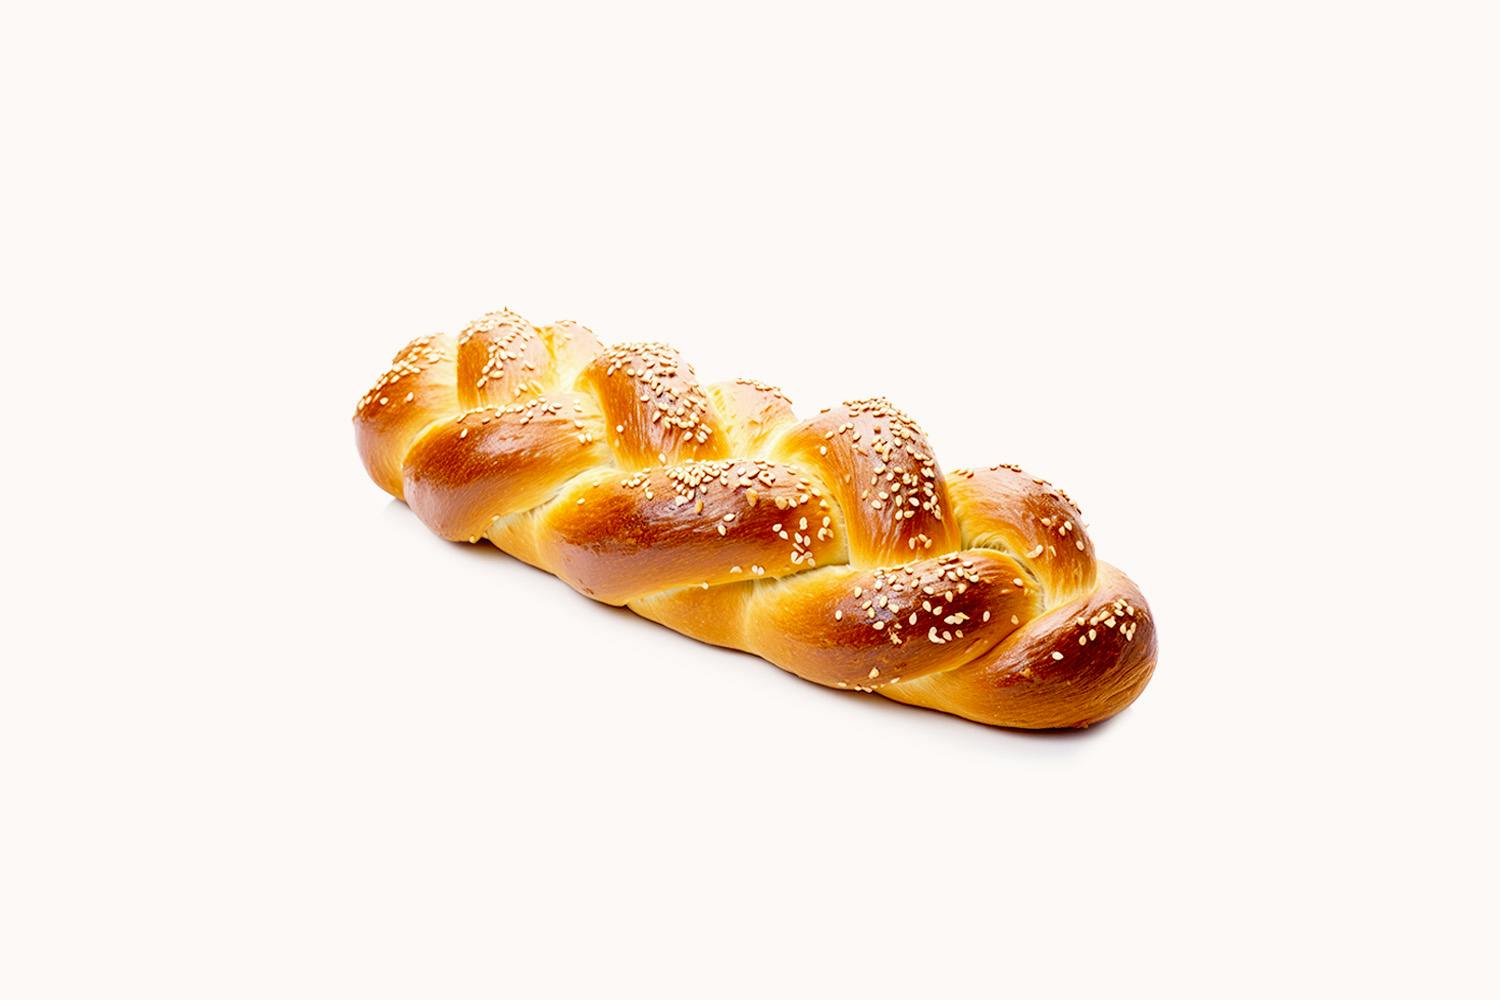 Braided Sesame Loaf